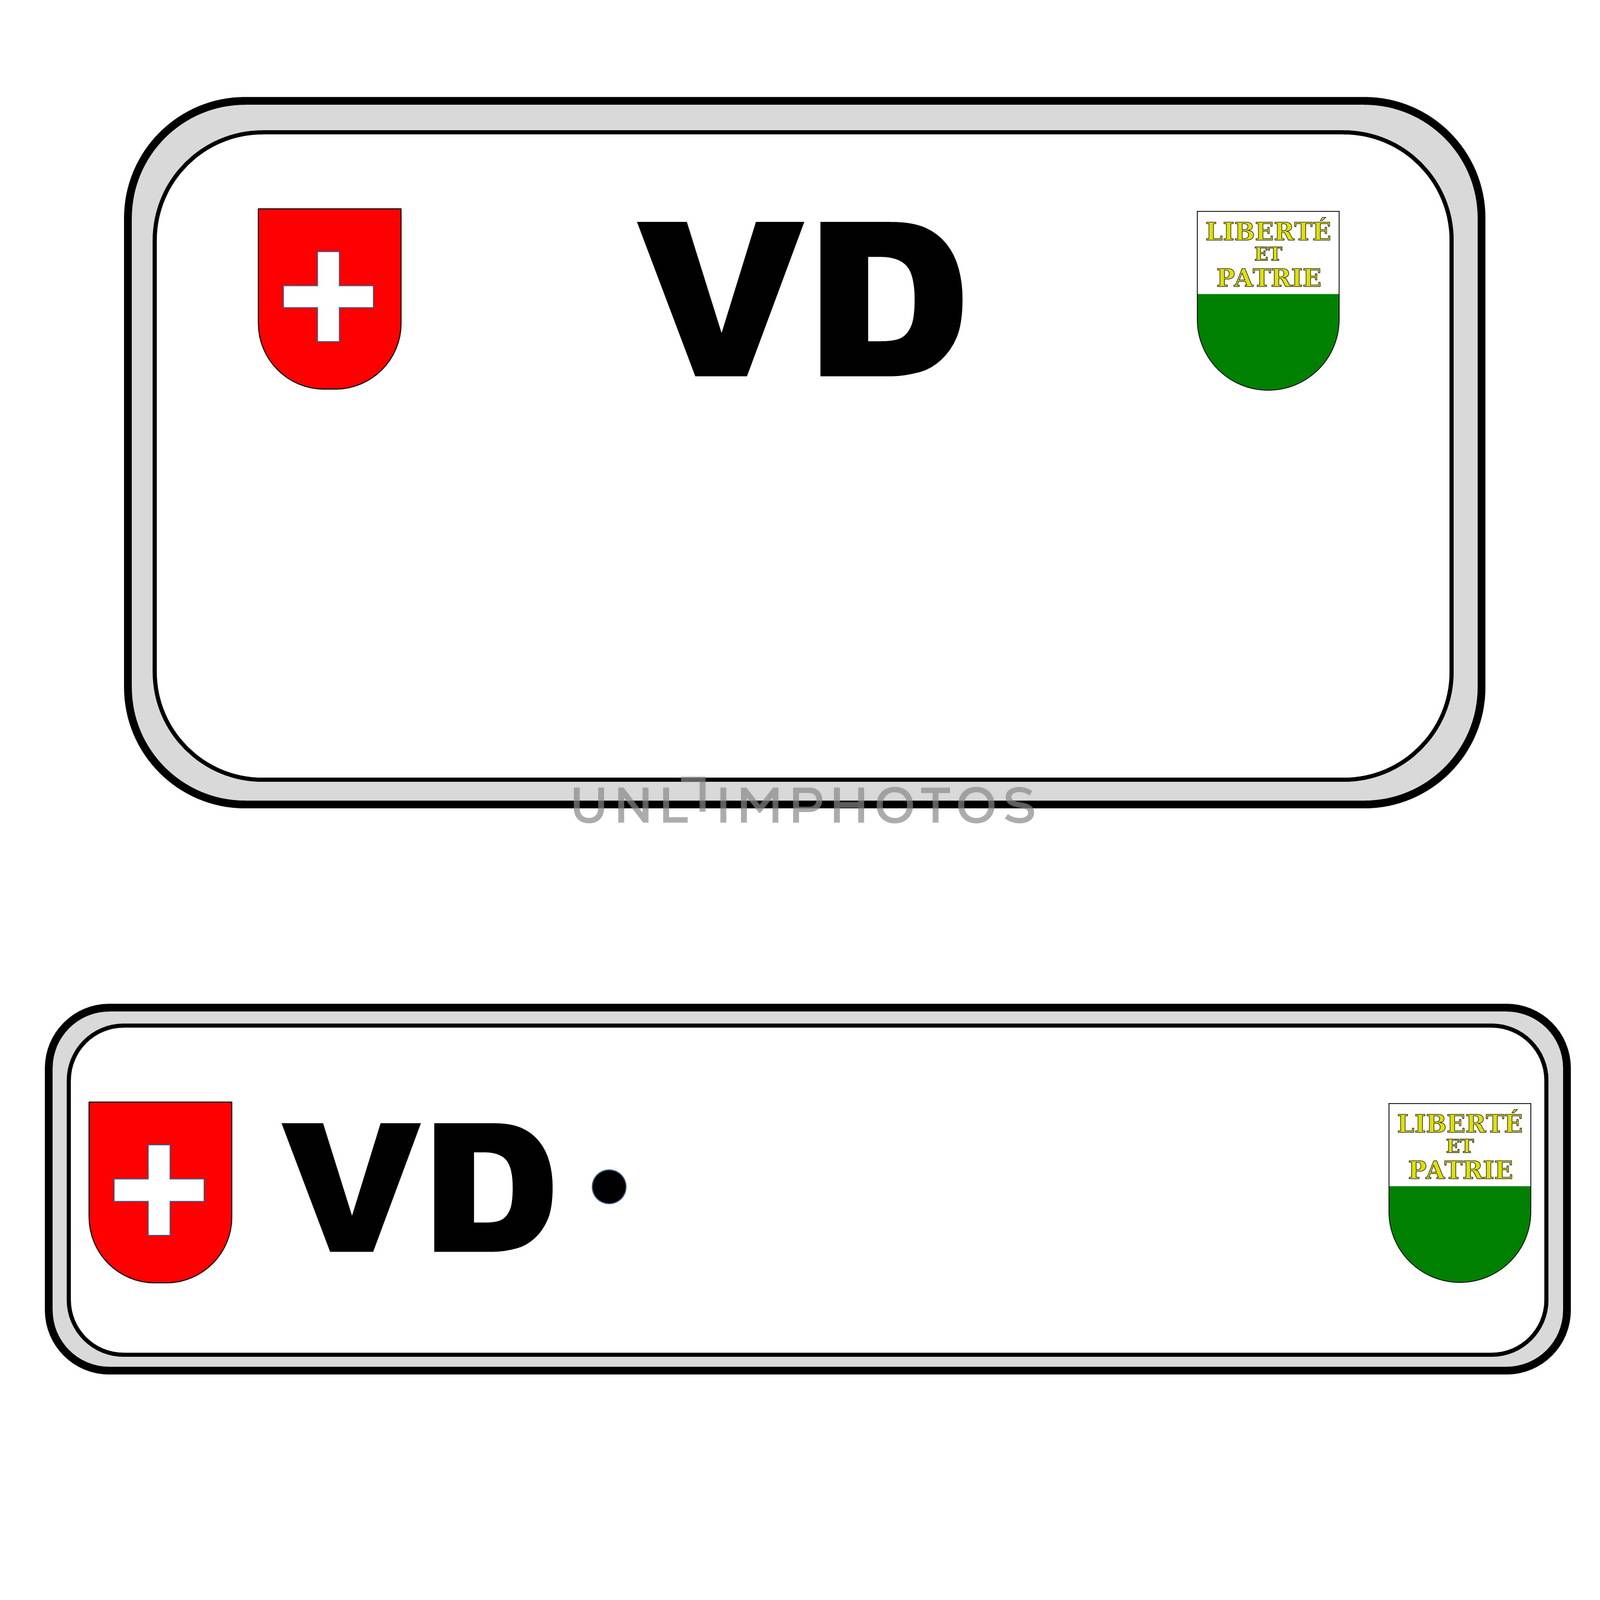 Vaud plate number, Switzerland by Elenaphotos21